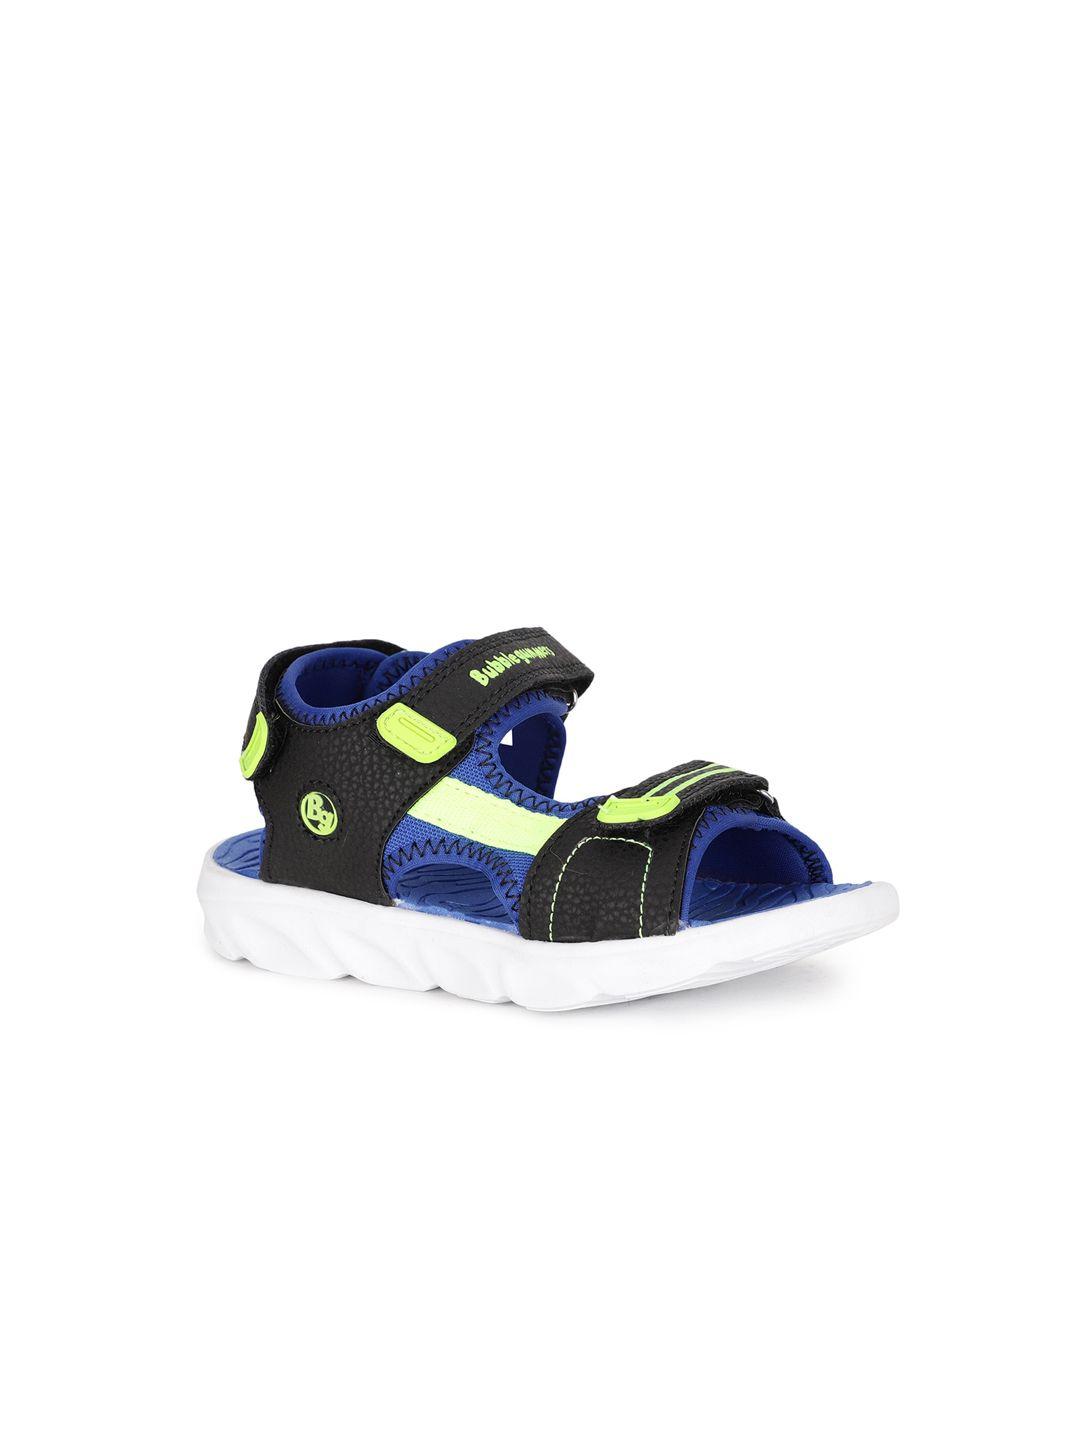 bubblegummers-boys-blue-&-black-solid-sports-sandals